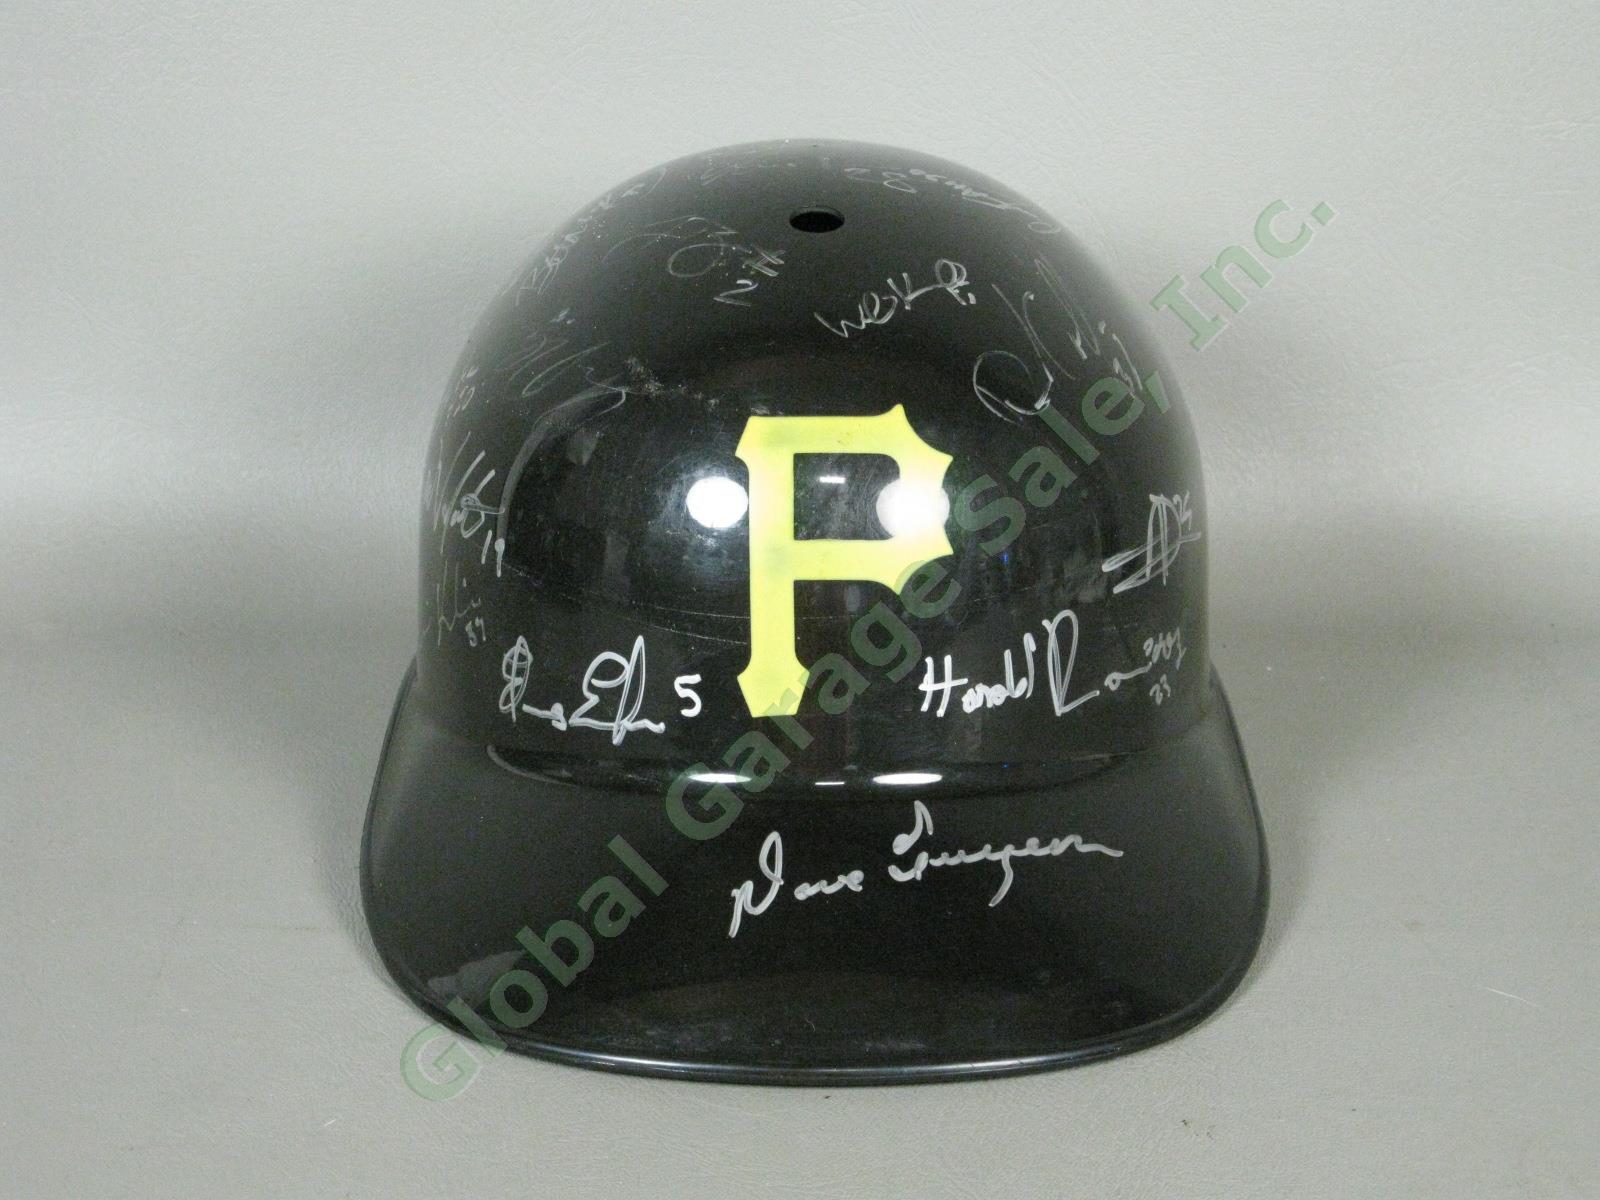 2013 Jamestown Jammers Team Signed Baseball Helmet NYPL Pittsburgh Pirates NR